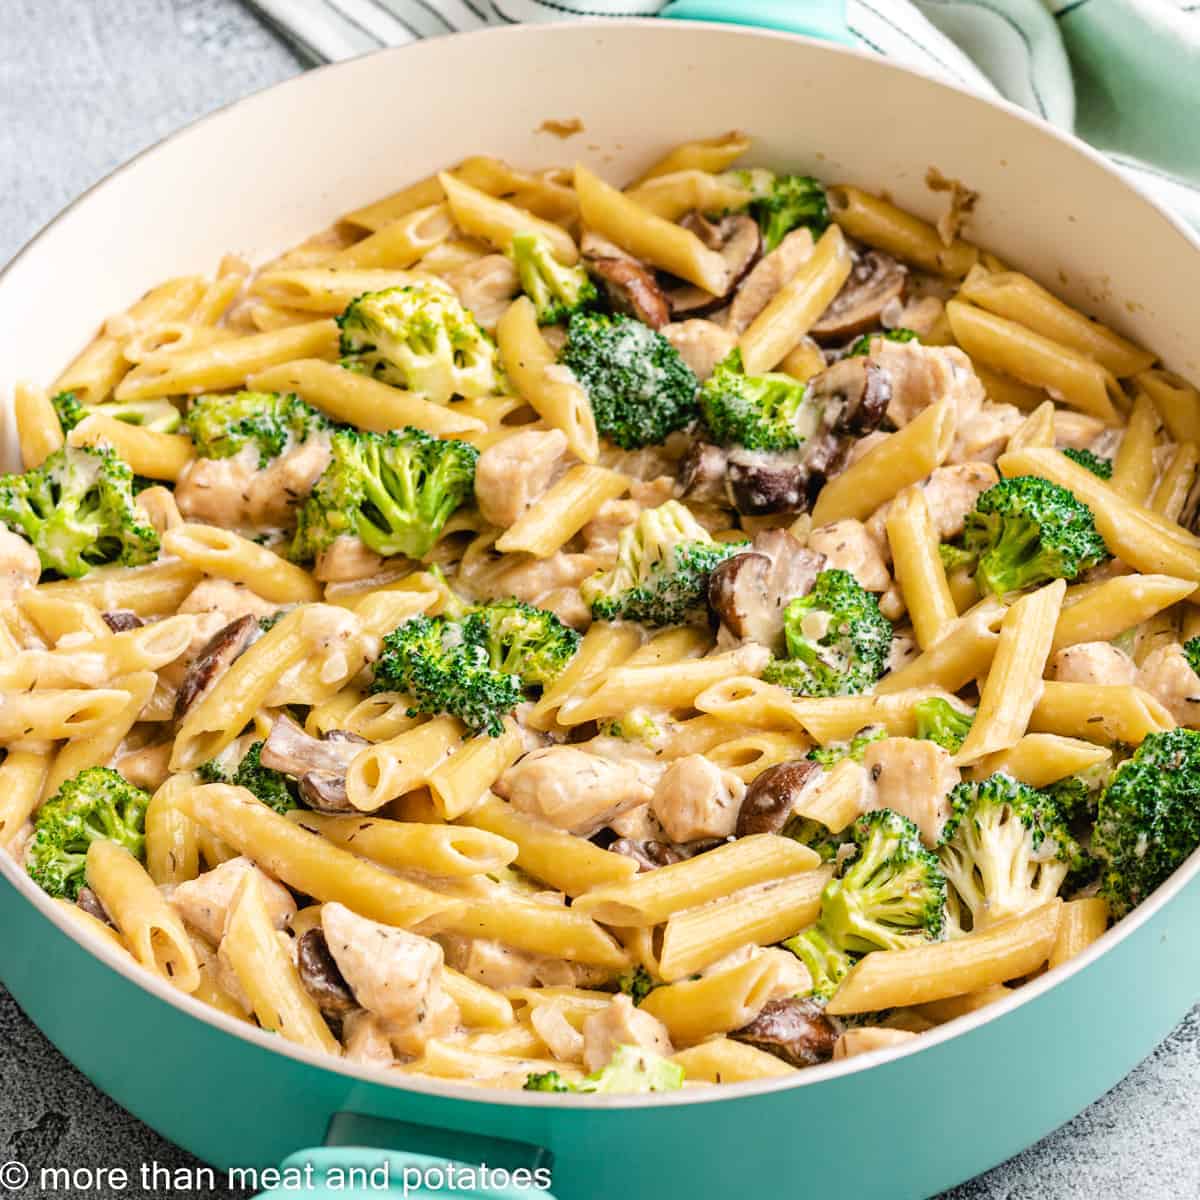 Chicken mushroom broccoli pasta featured image recipes